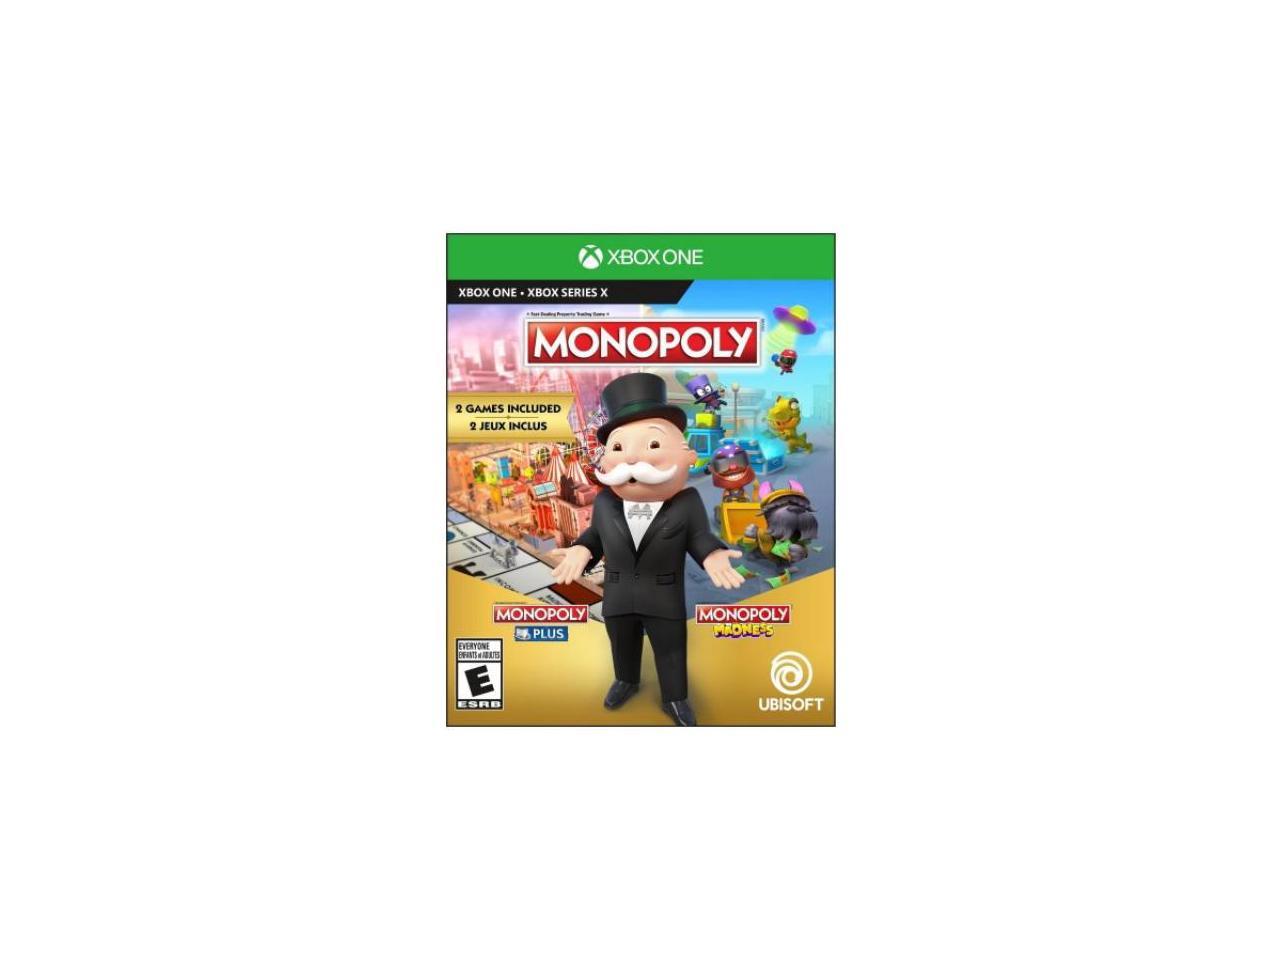 Ubisoft monopoly plus + monopoly madness - xbox one, xbox series x, xbox series s